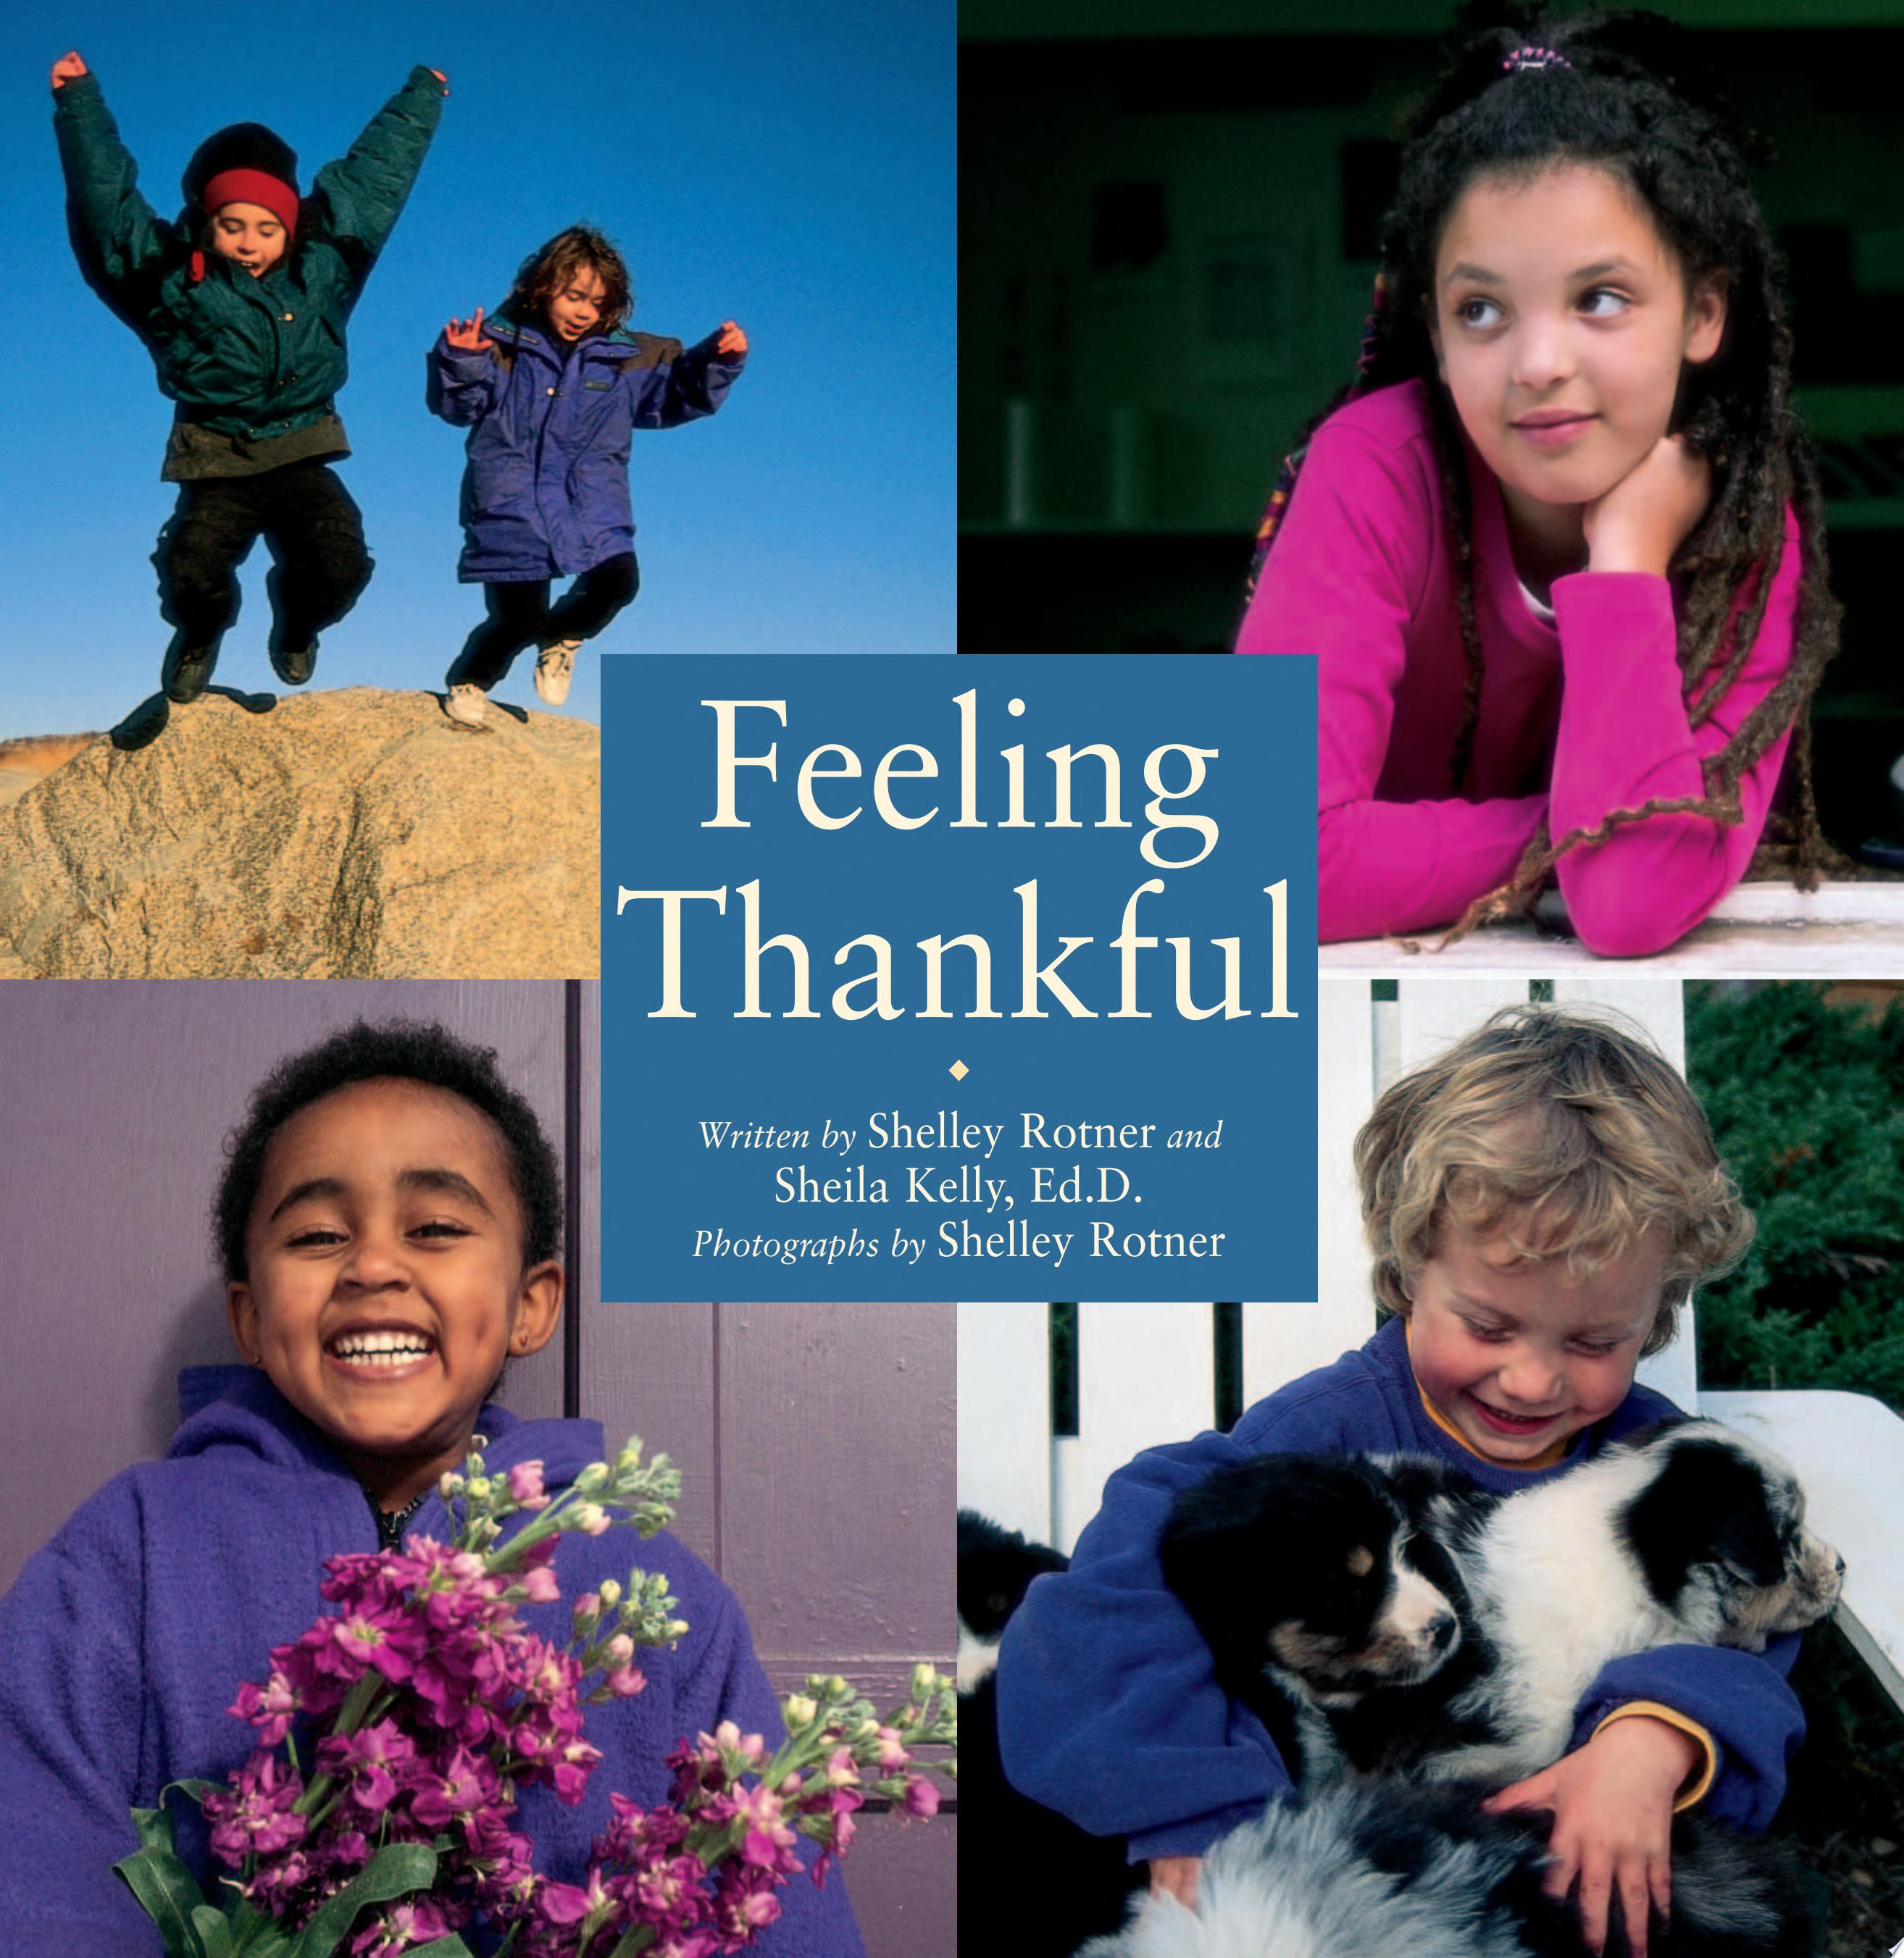 Image for "Feeling Thankful"